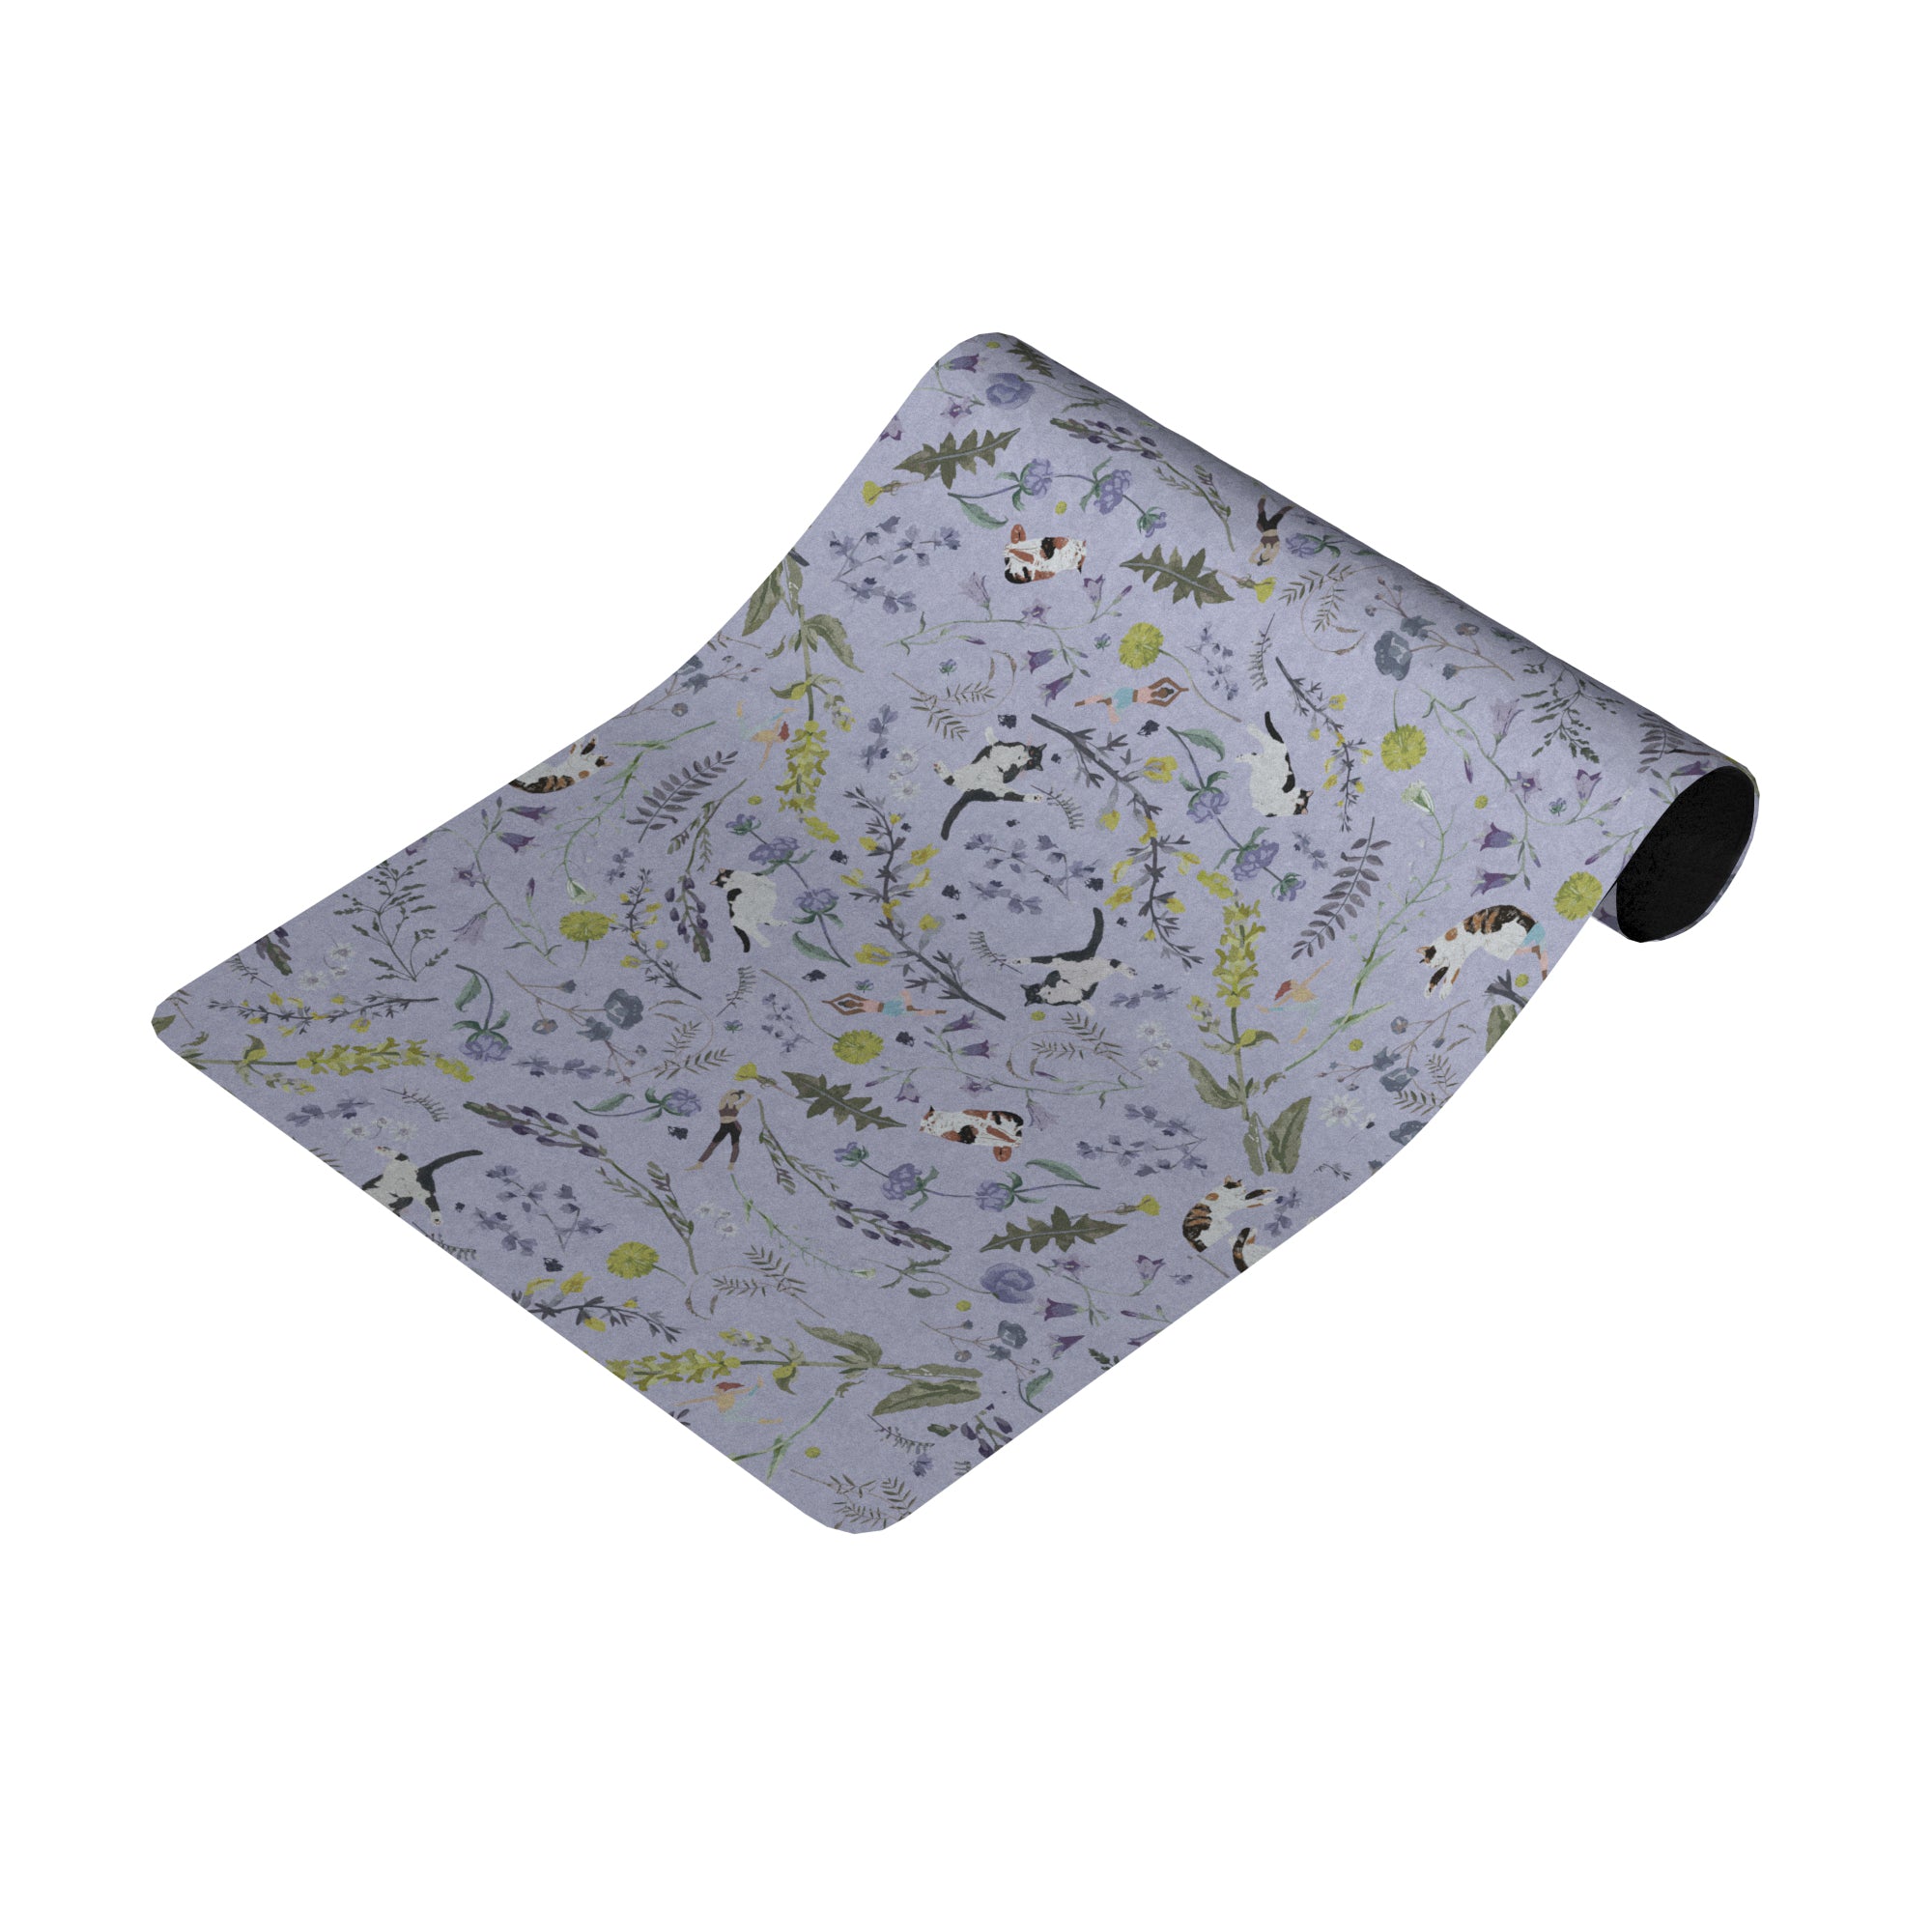 "Yogis Cat and Flower" Non-Slip, Jmat, Thick Yoga Mat (5 mm)